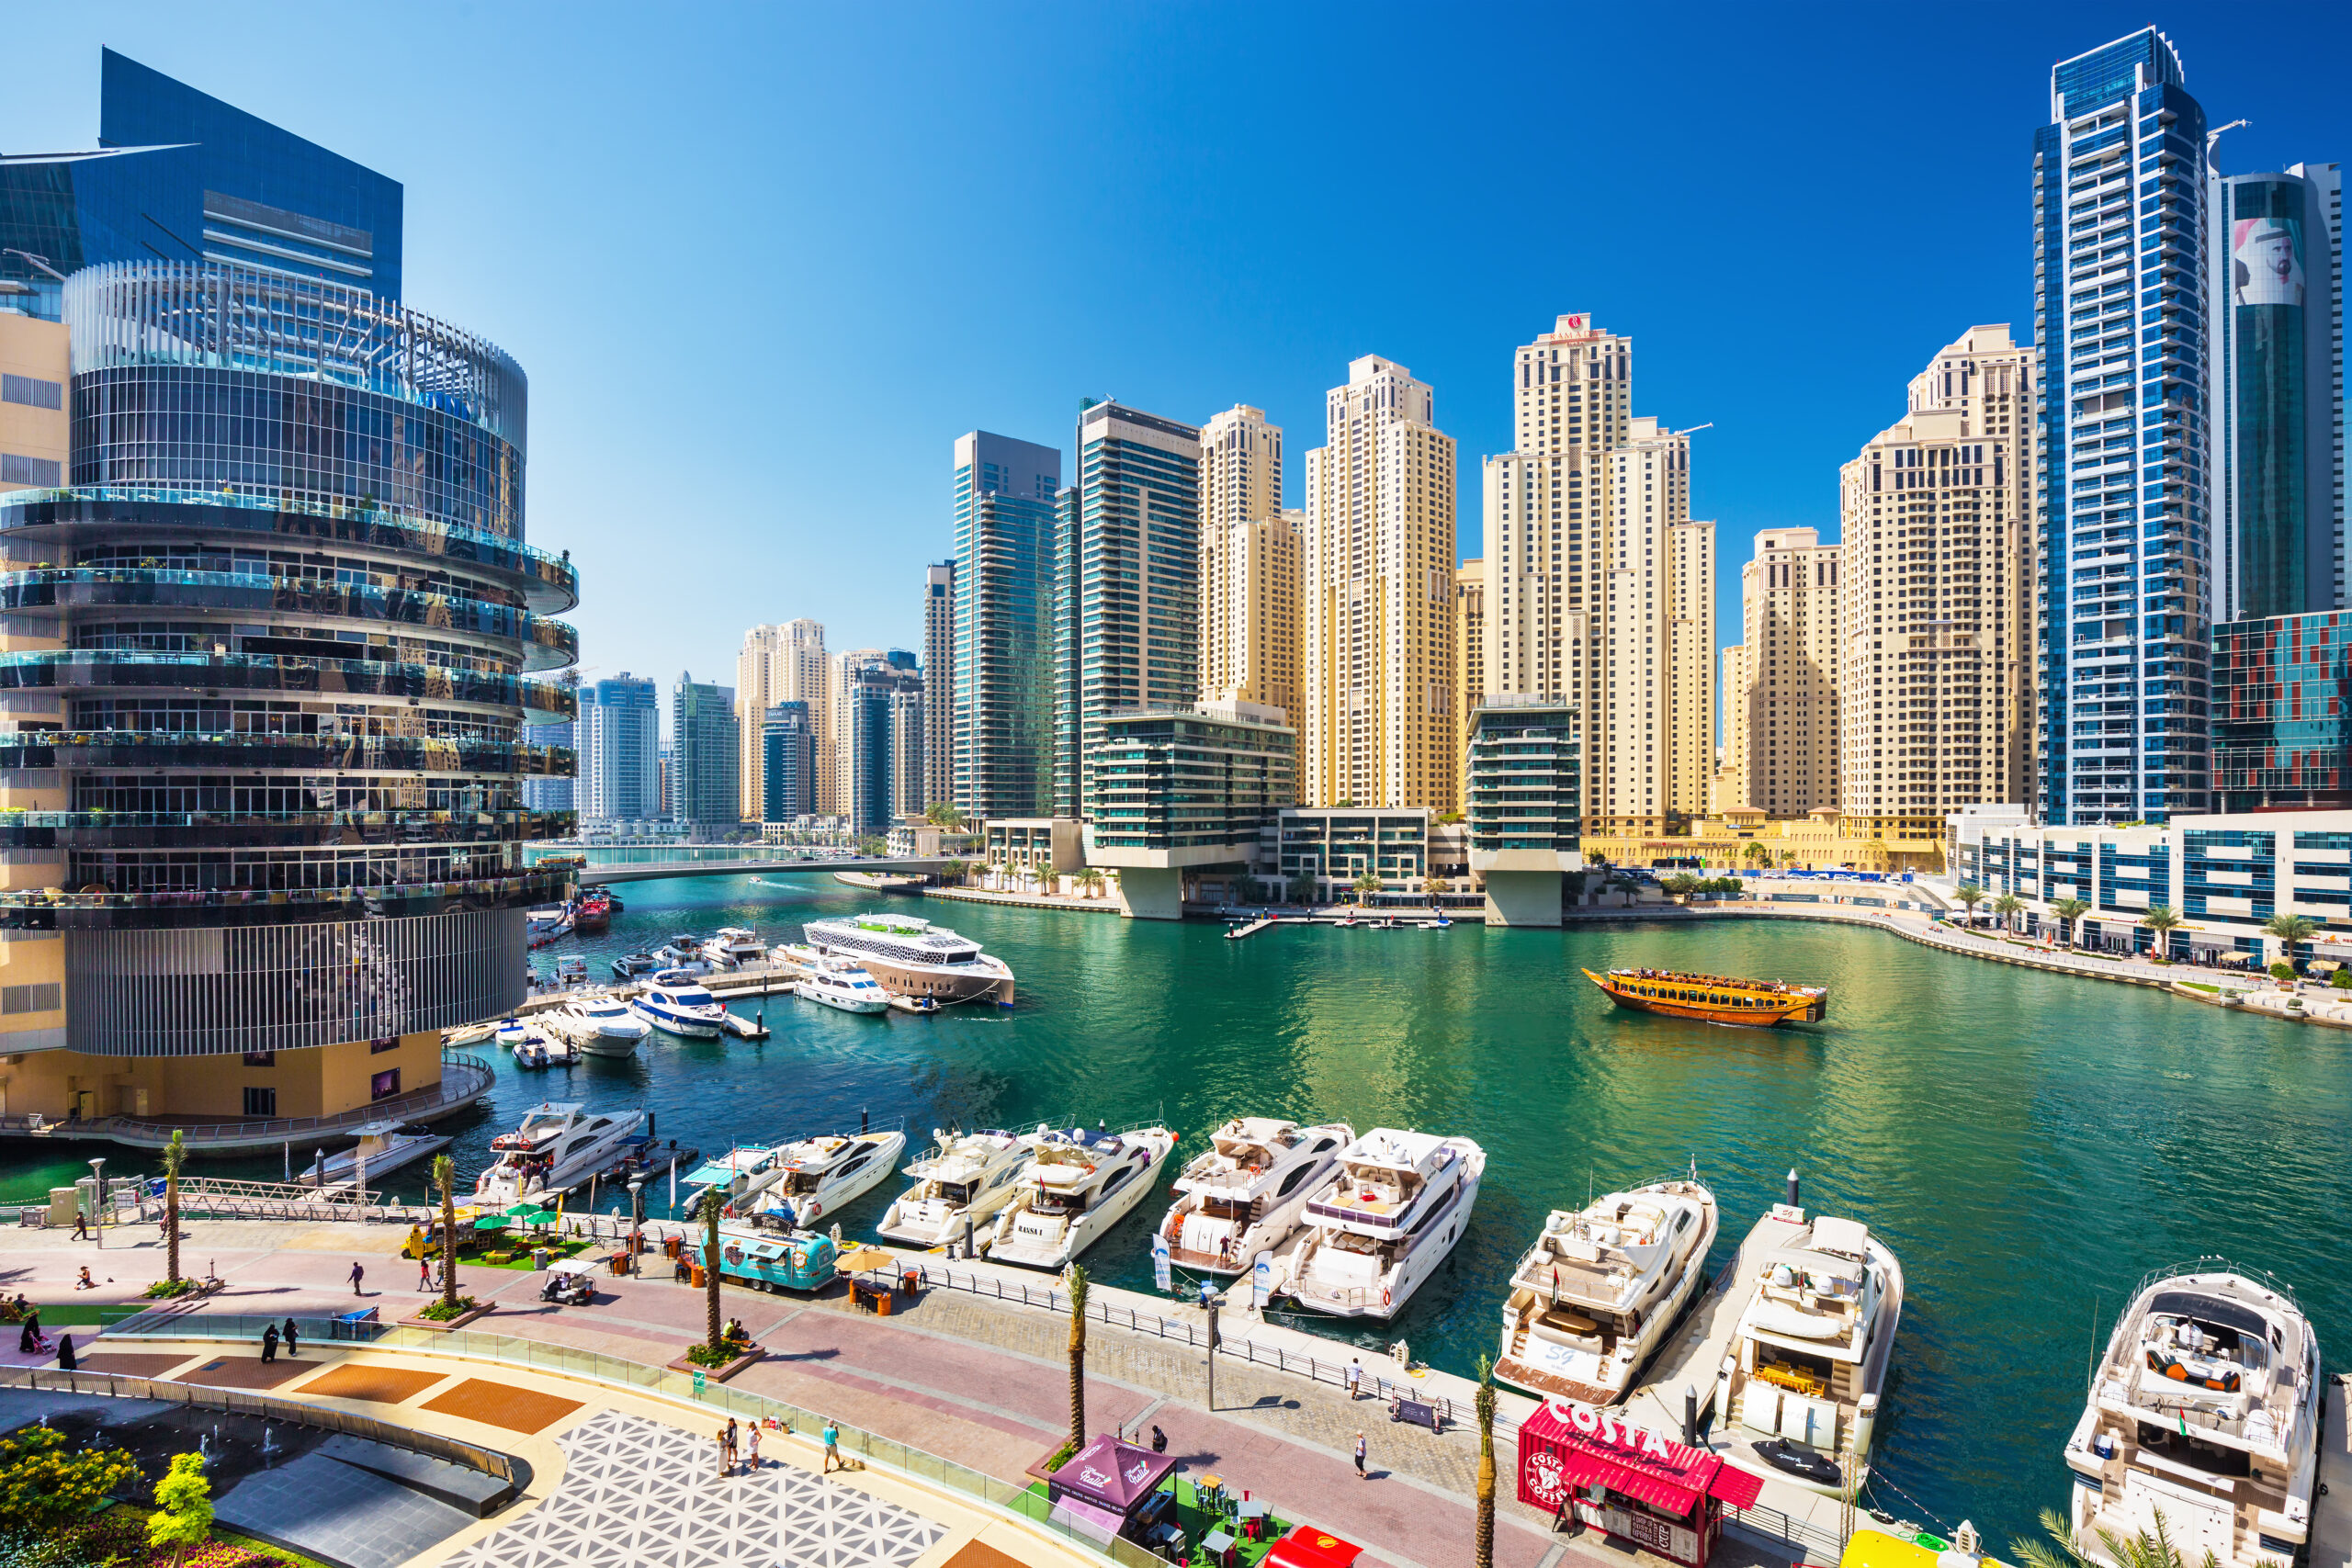 Dubai Water Bus - Luxury yachts